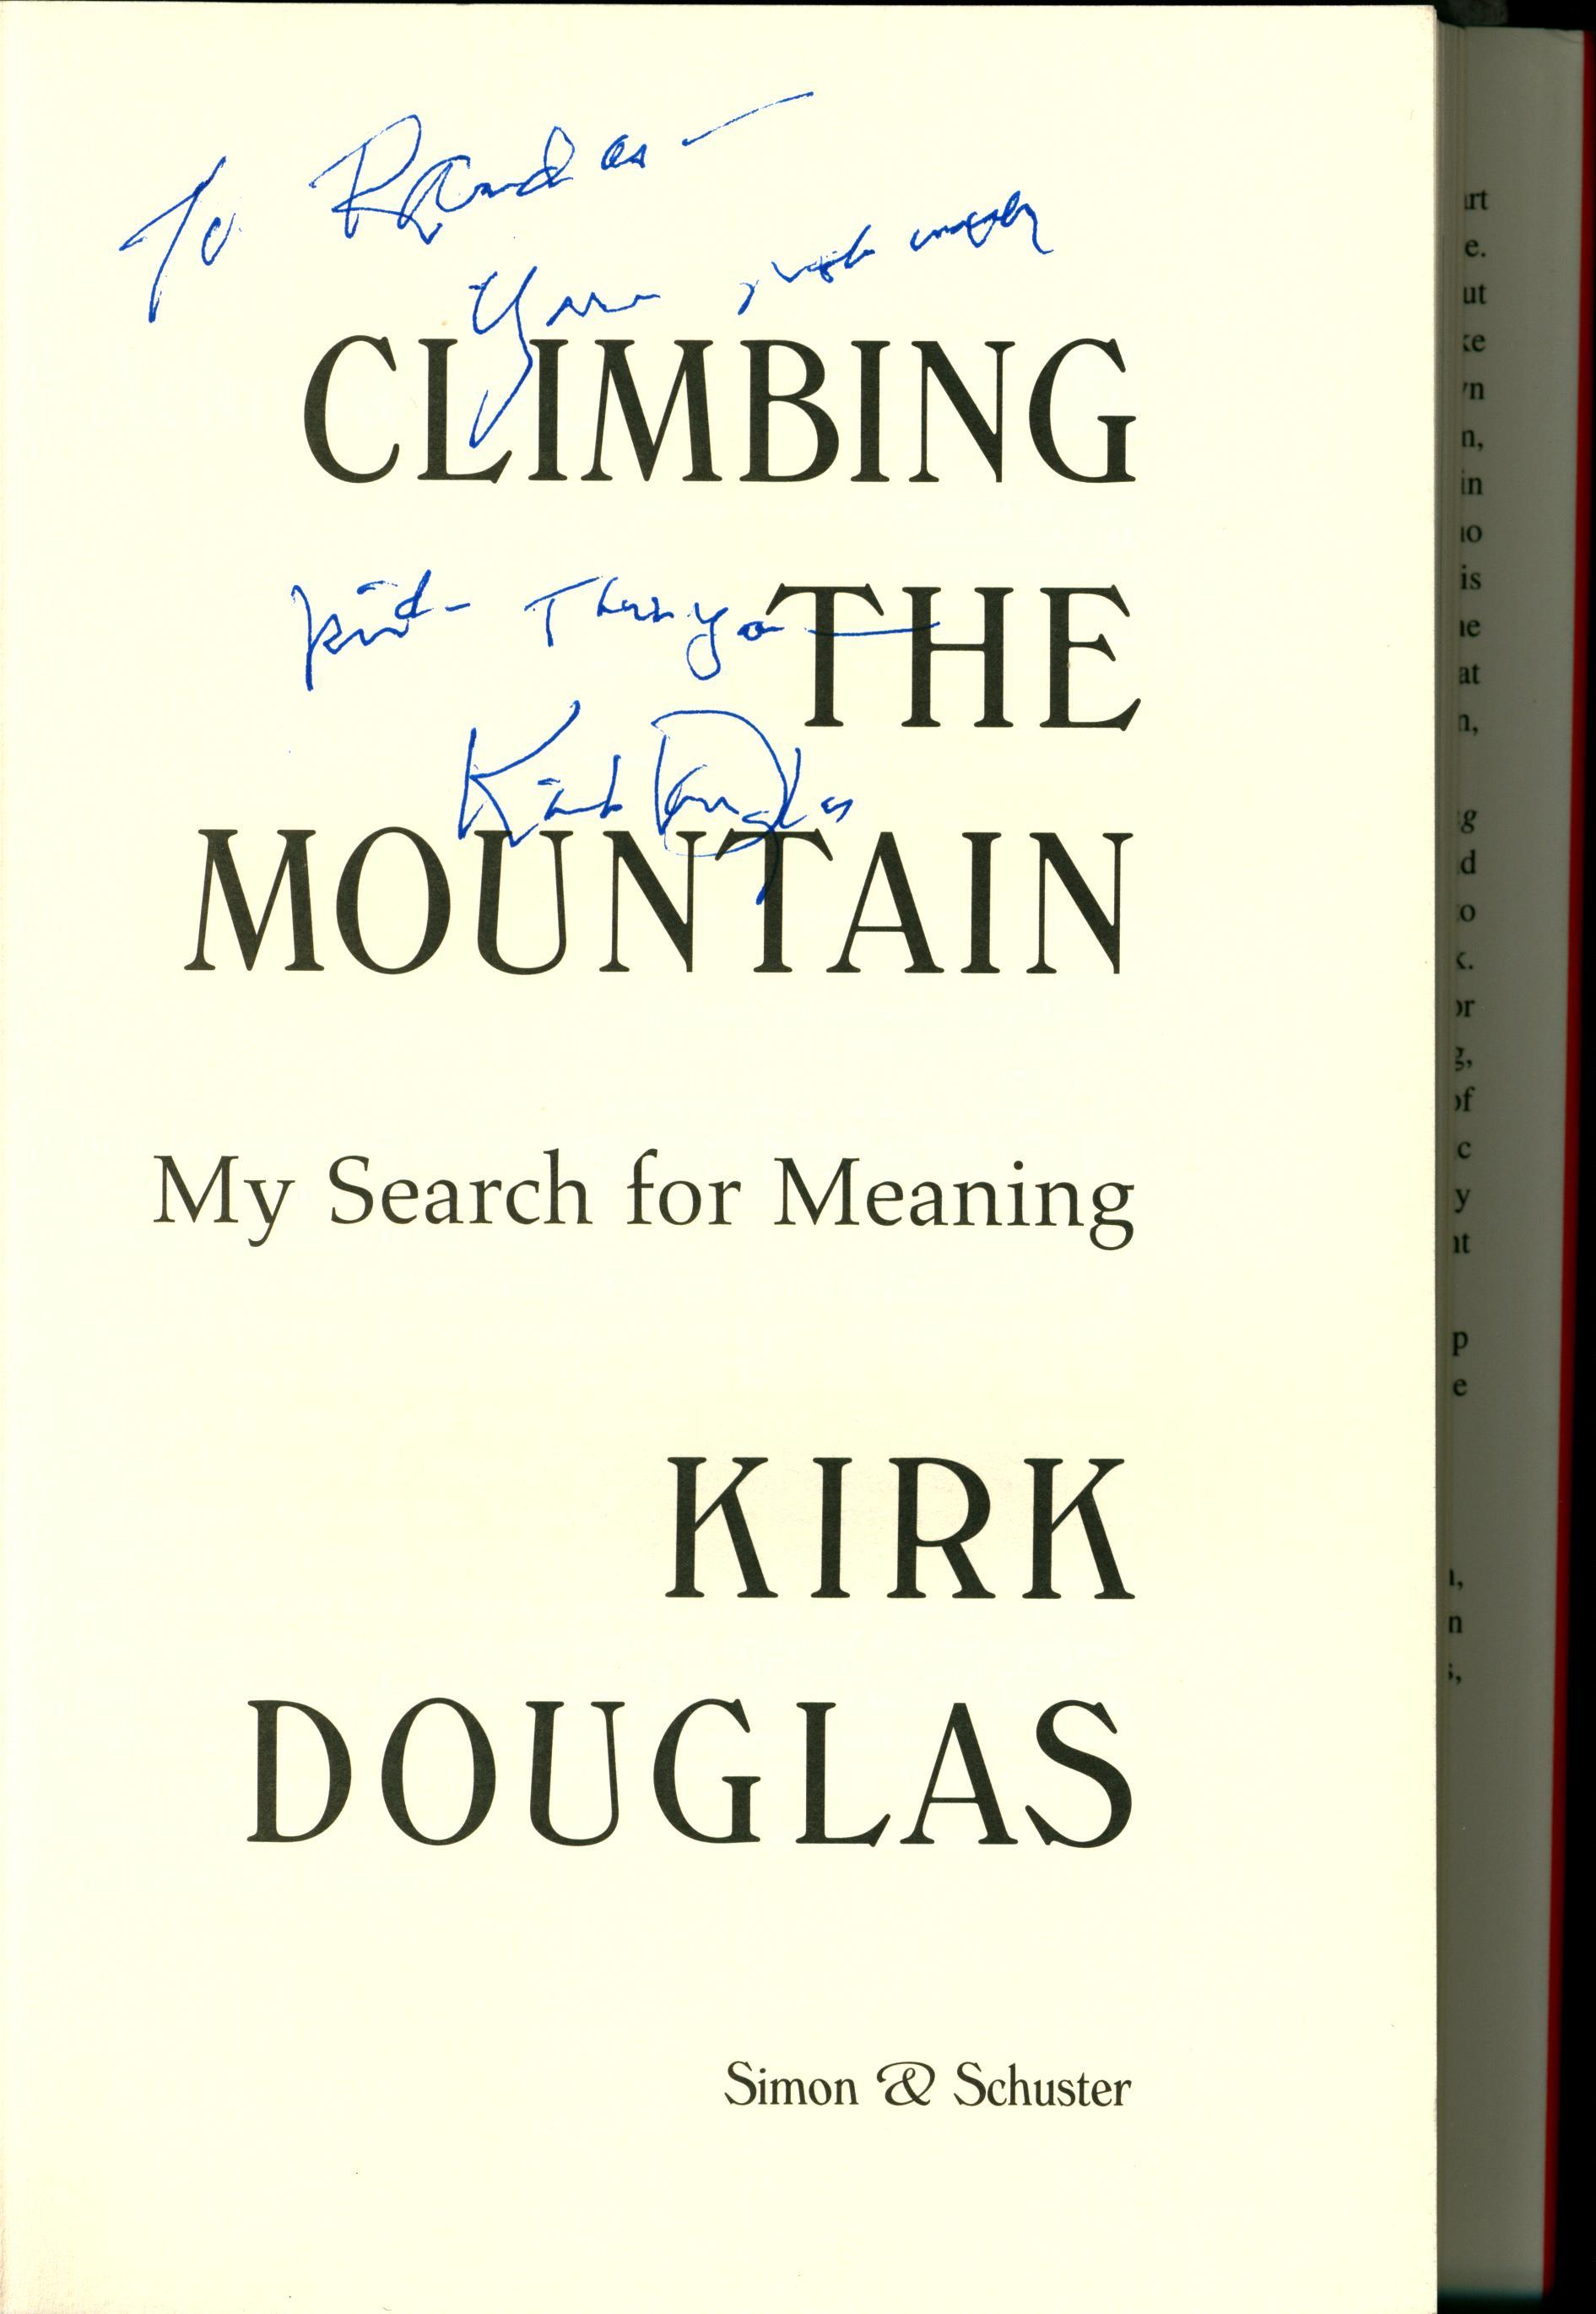 Climbing_the_Mountain_by_Kirk_Douglas.jpg